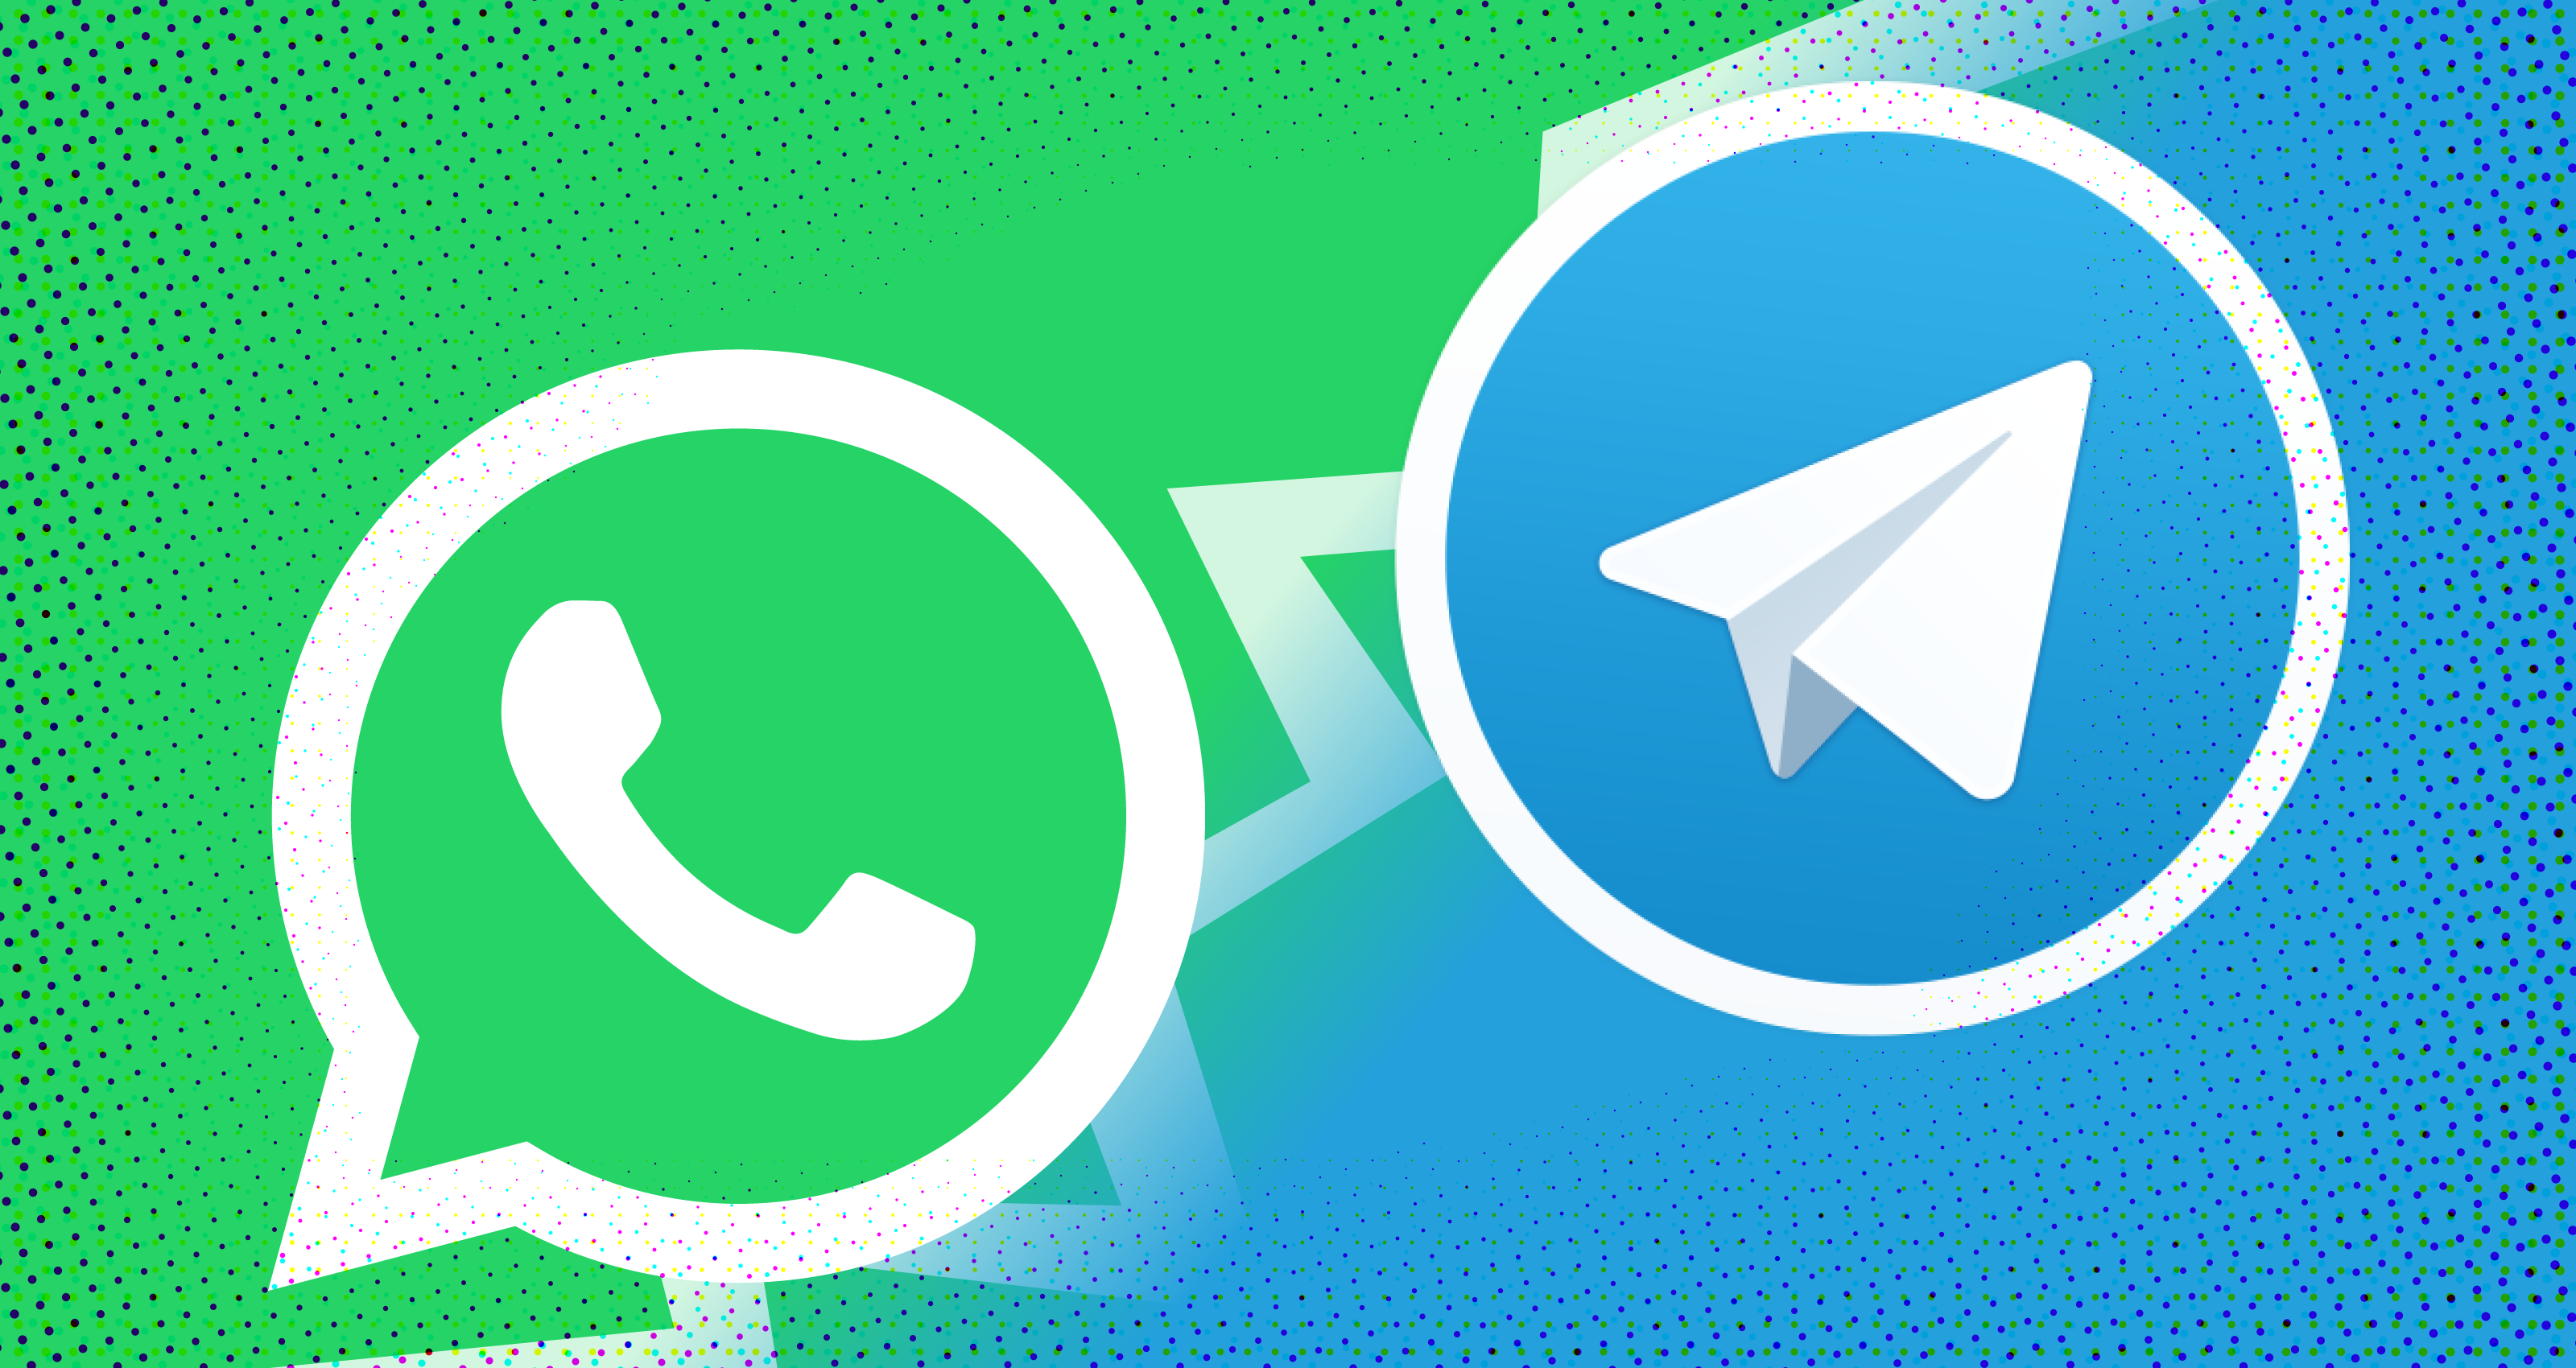 francolise tentata estorsione WhatsApp Telegram 12 novembre